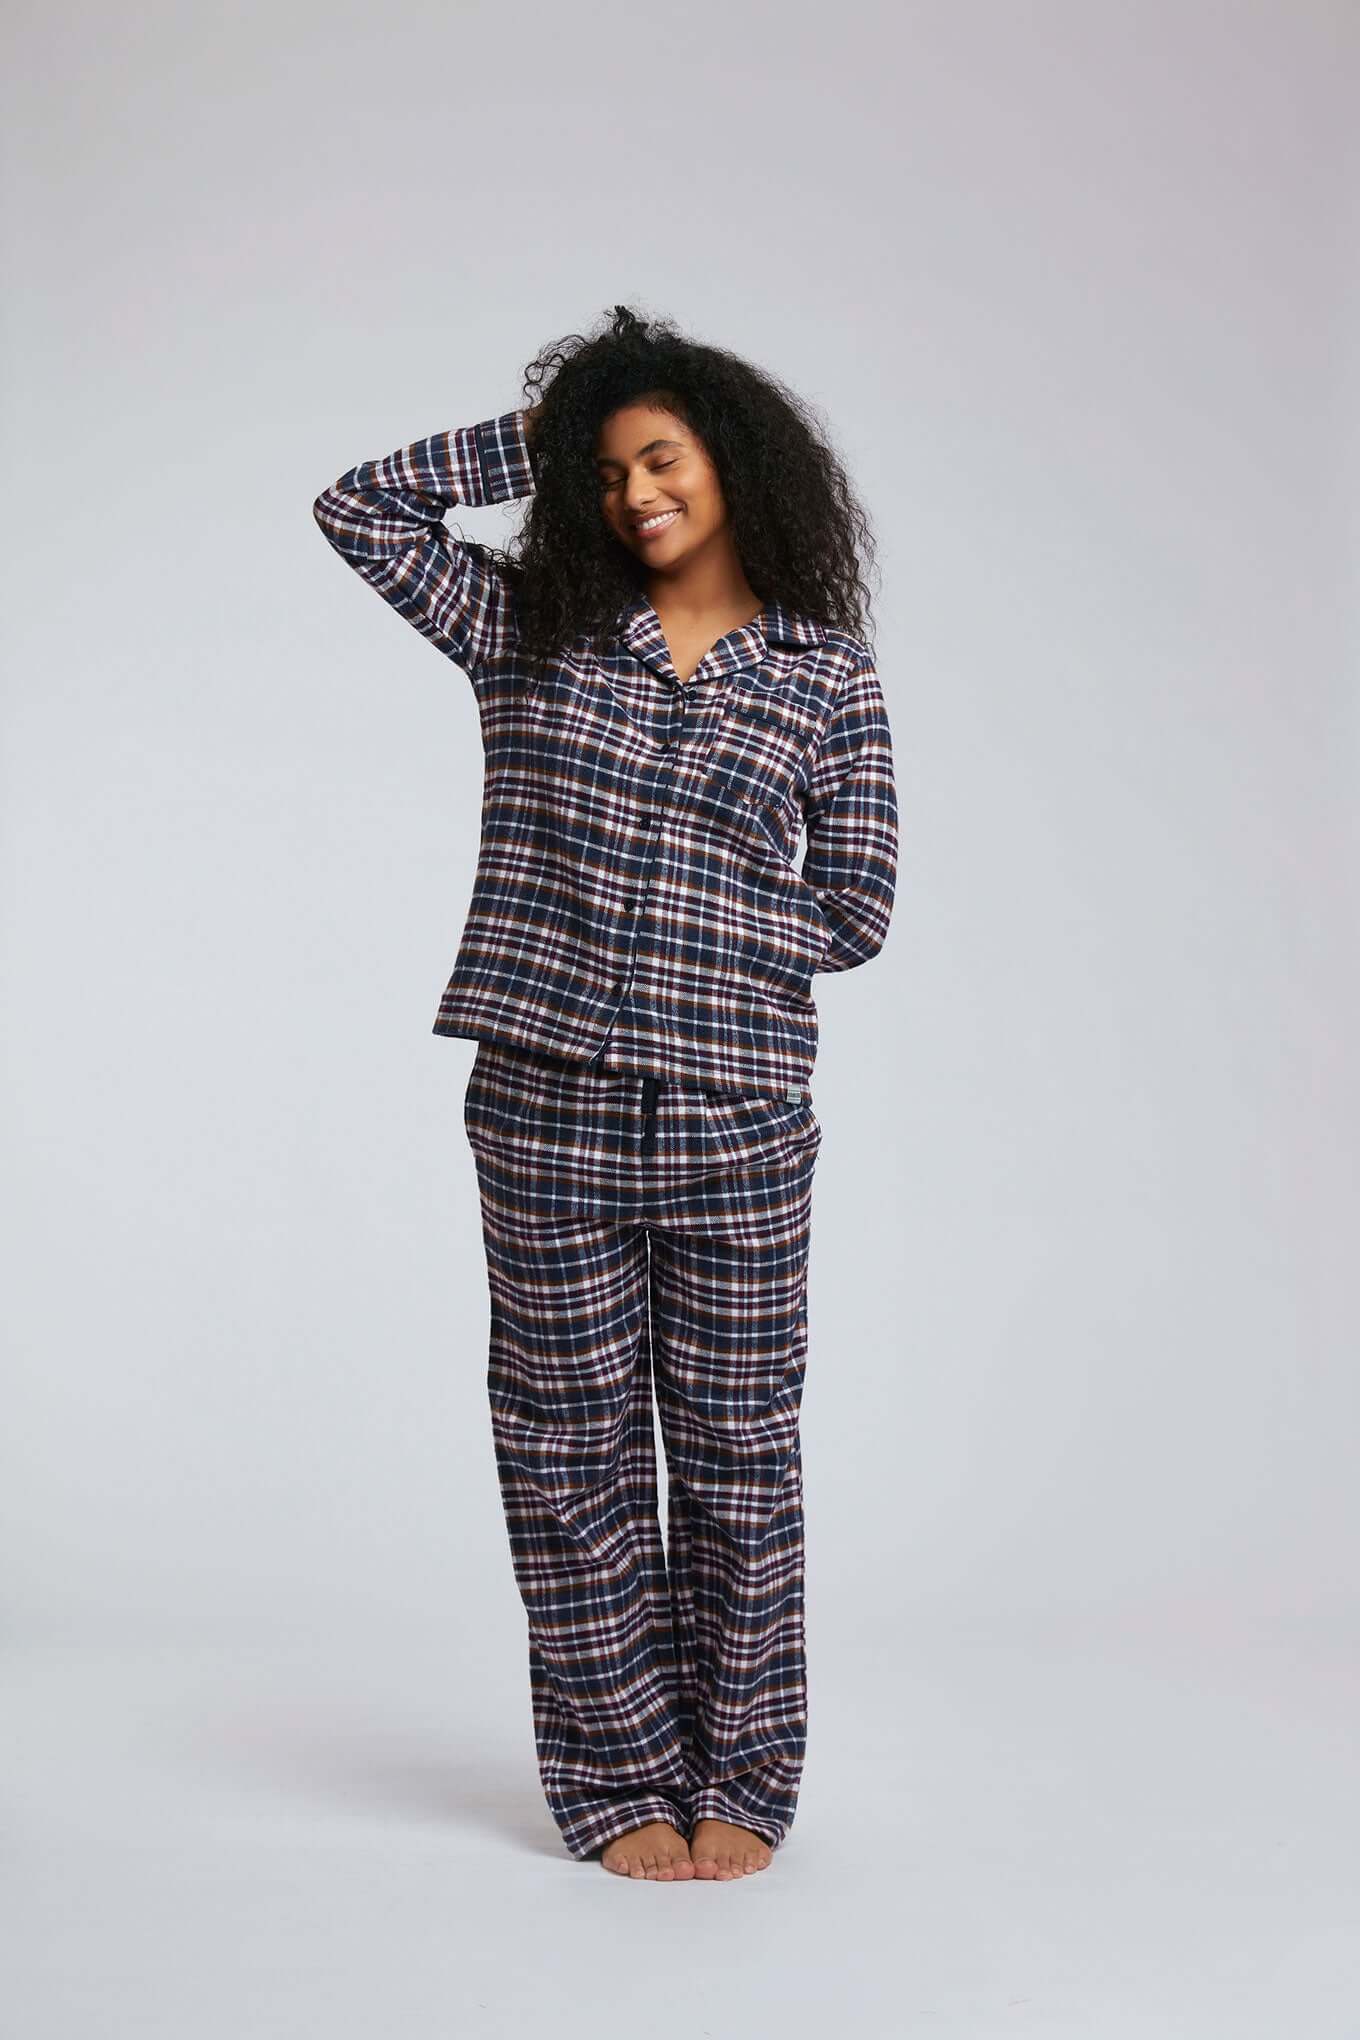 JIM JAM Womens Organic Cotton Pyjama Set Navy, Size 4 / UK 14 / EUR 42